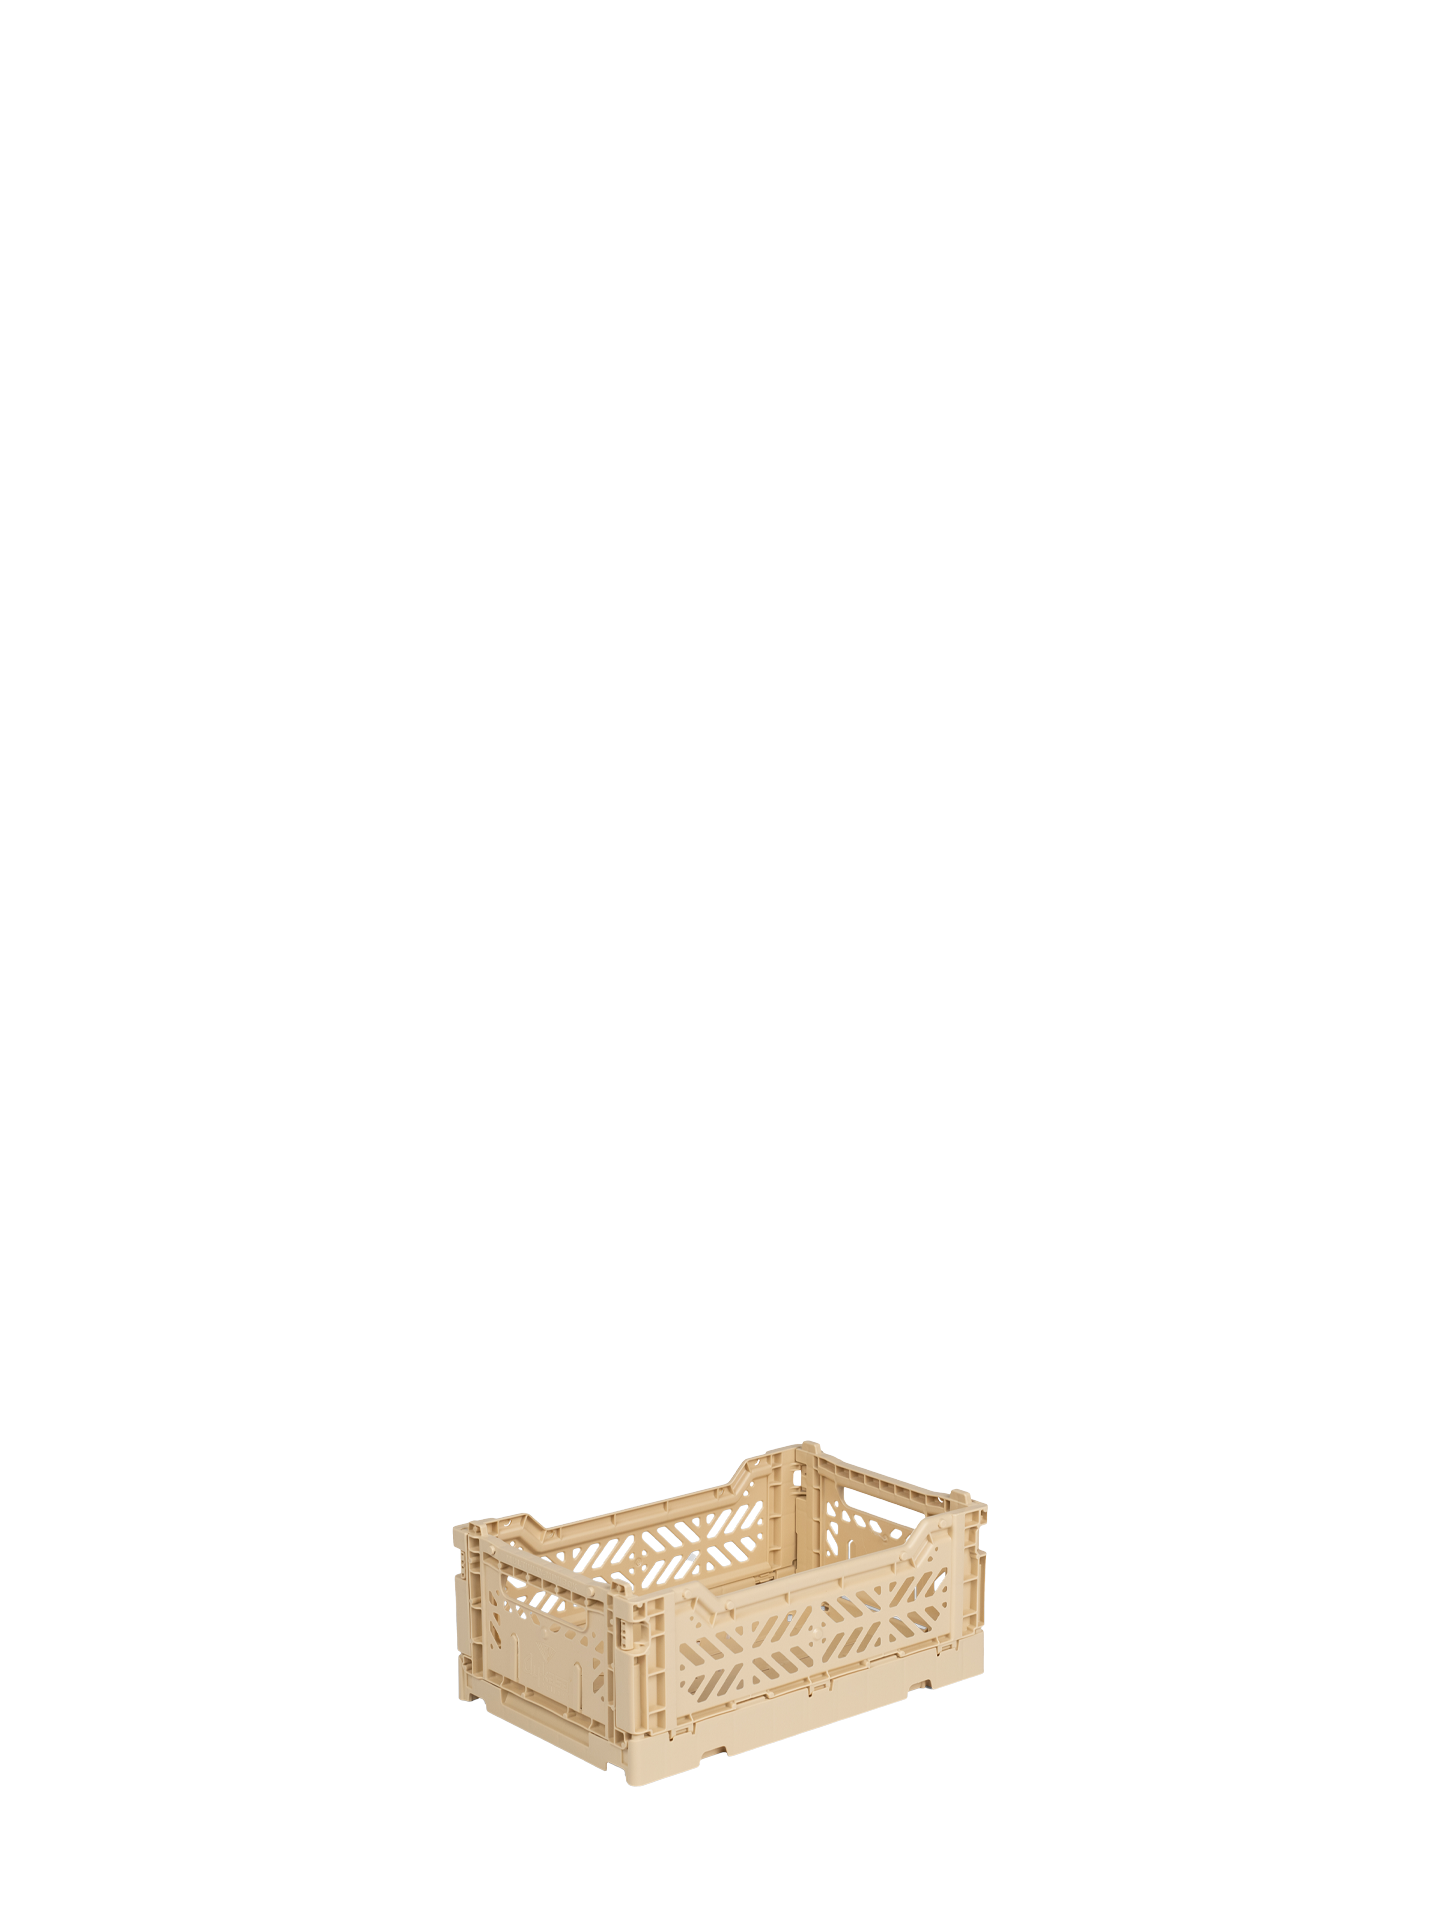 Mini Aykasa crate in warm beige boulder stacks and folds